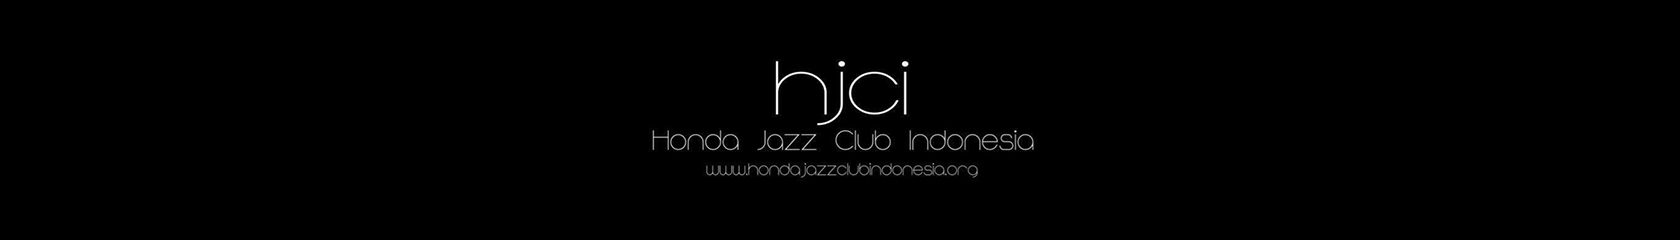 Honda Jazz Club Indonesia